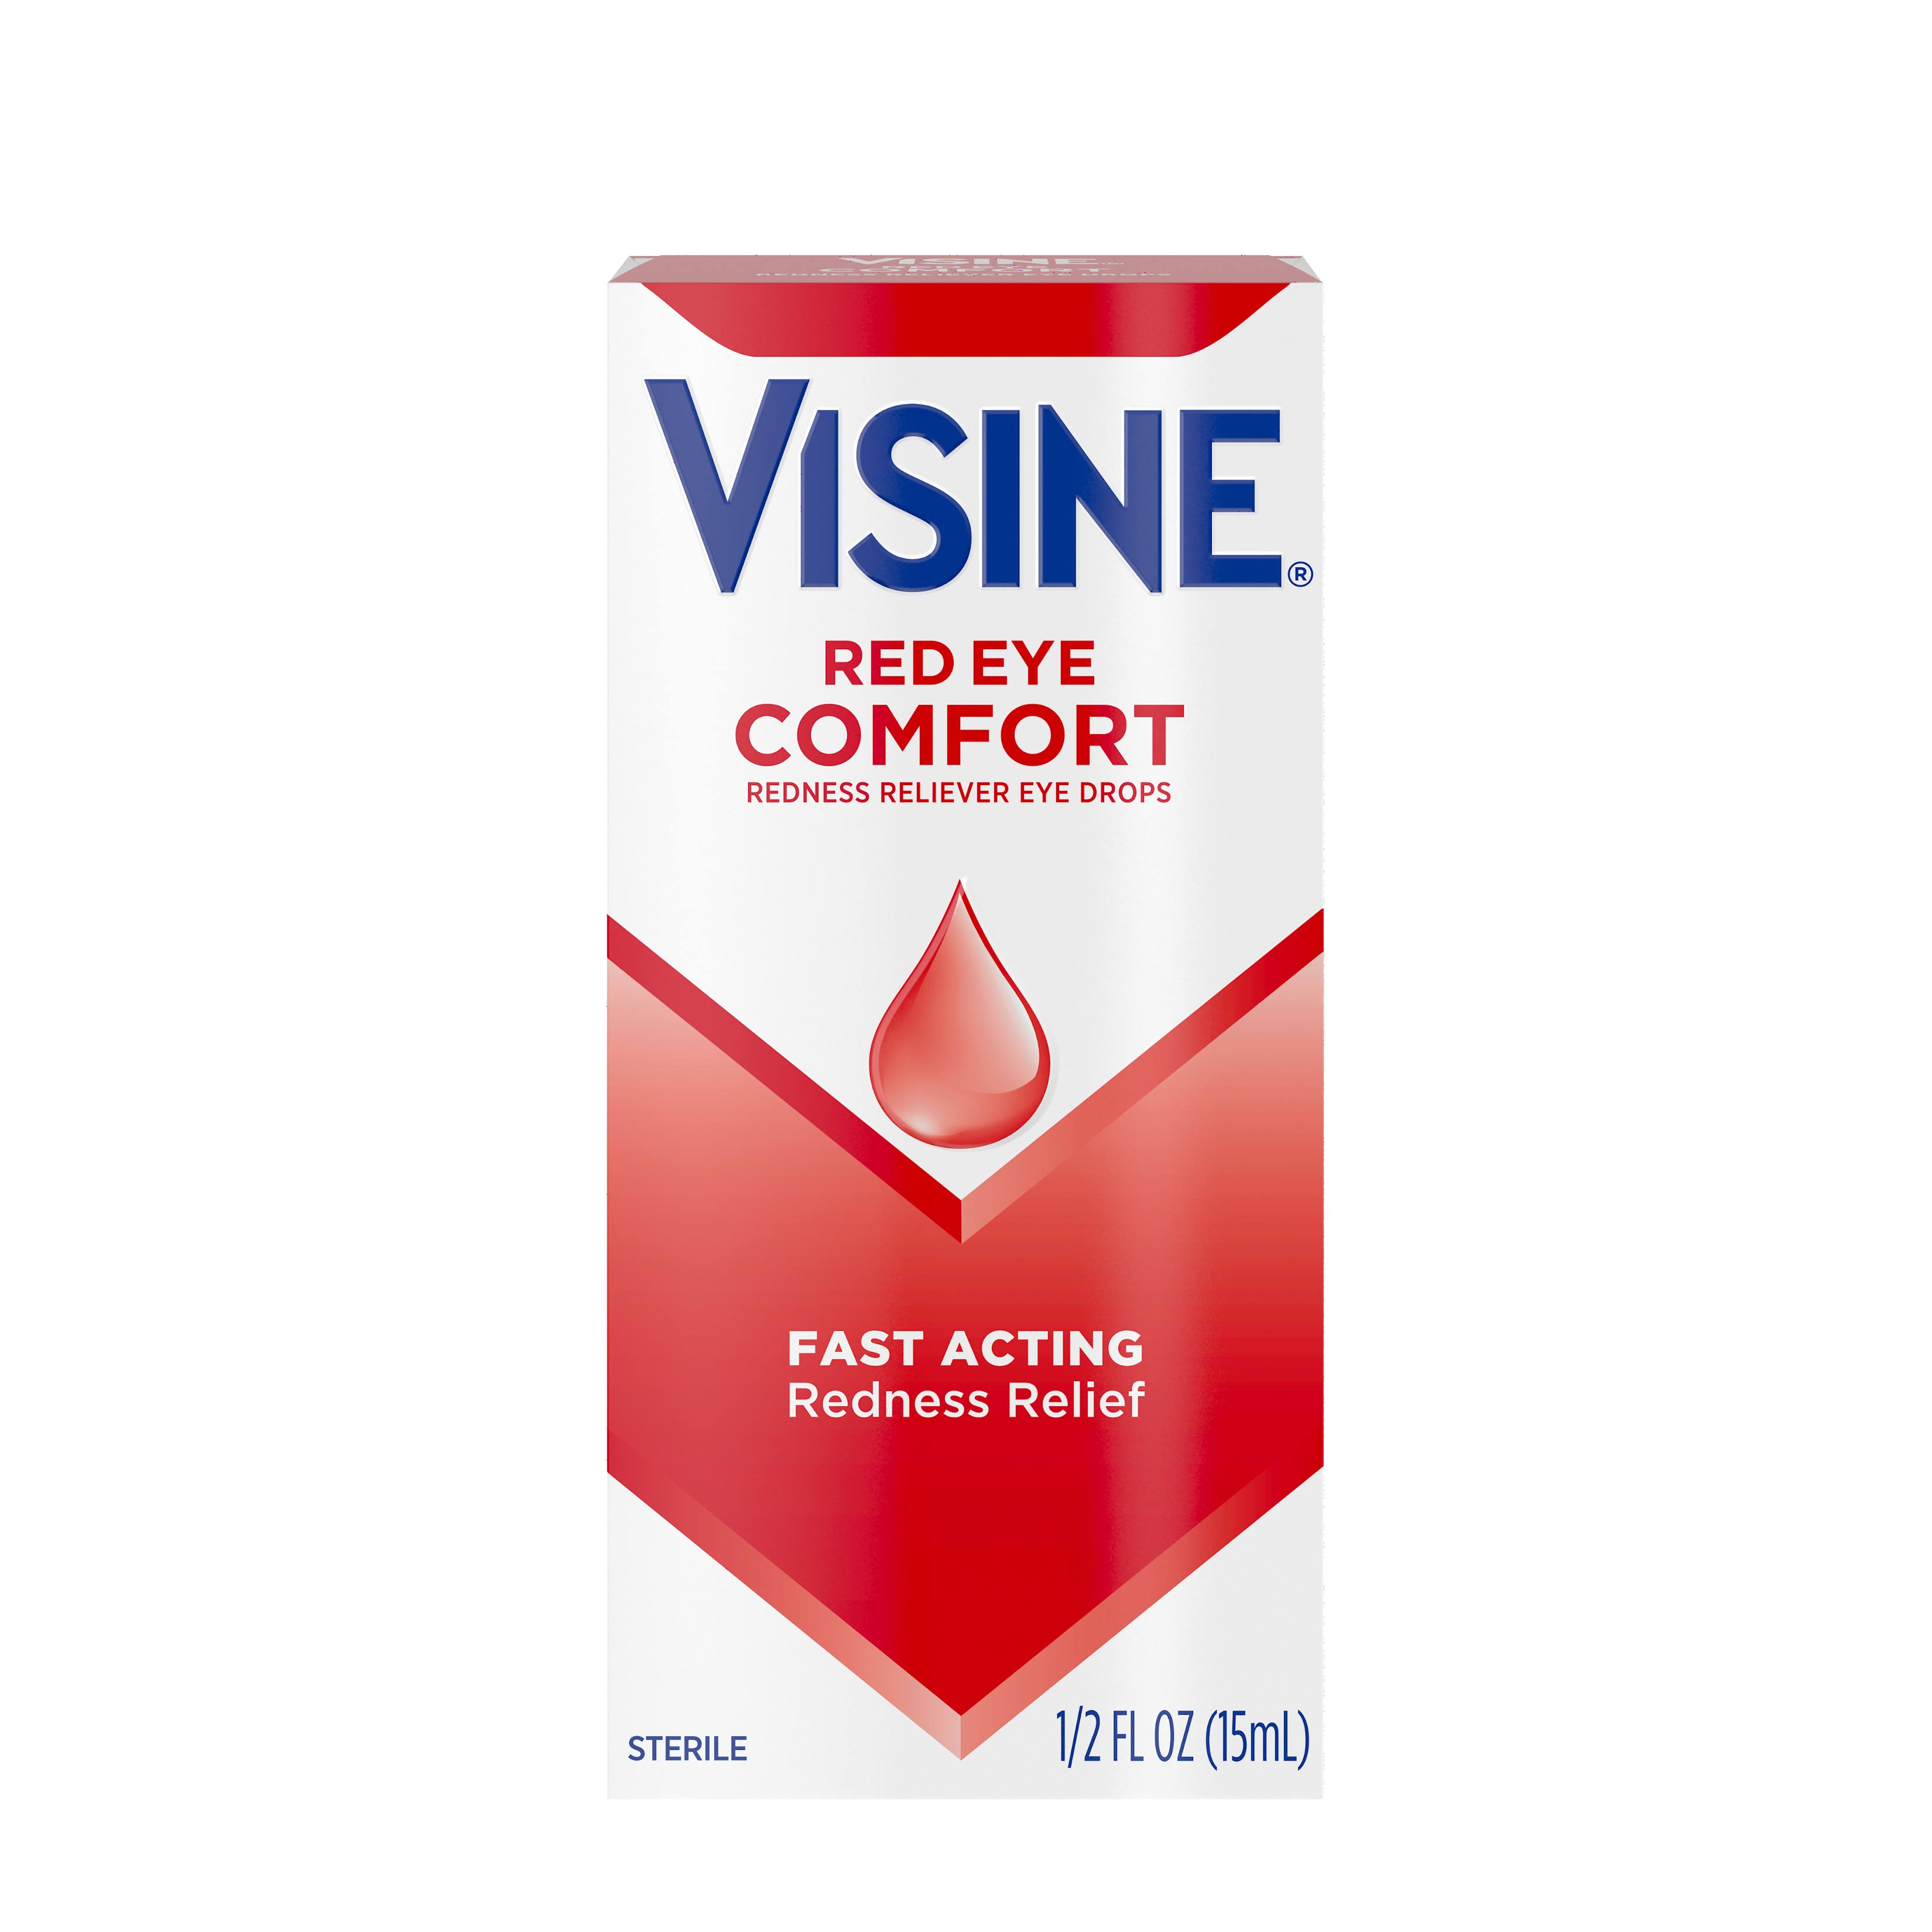 Visine Red Eye Comfort Redness Reliever Eye Drops 1/2 fl oz (15 ml)